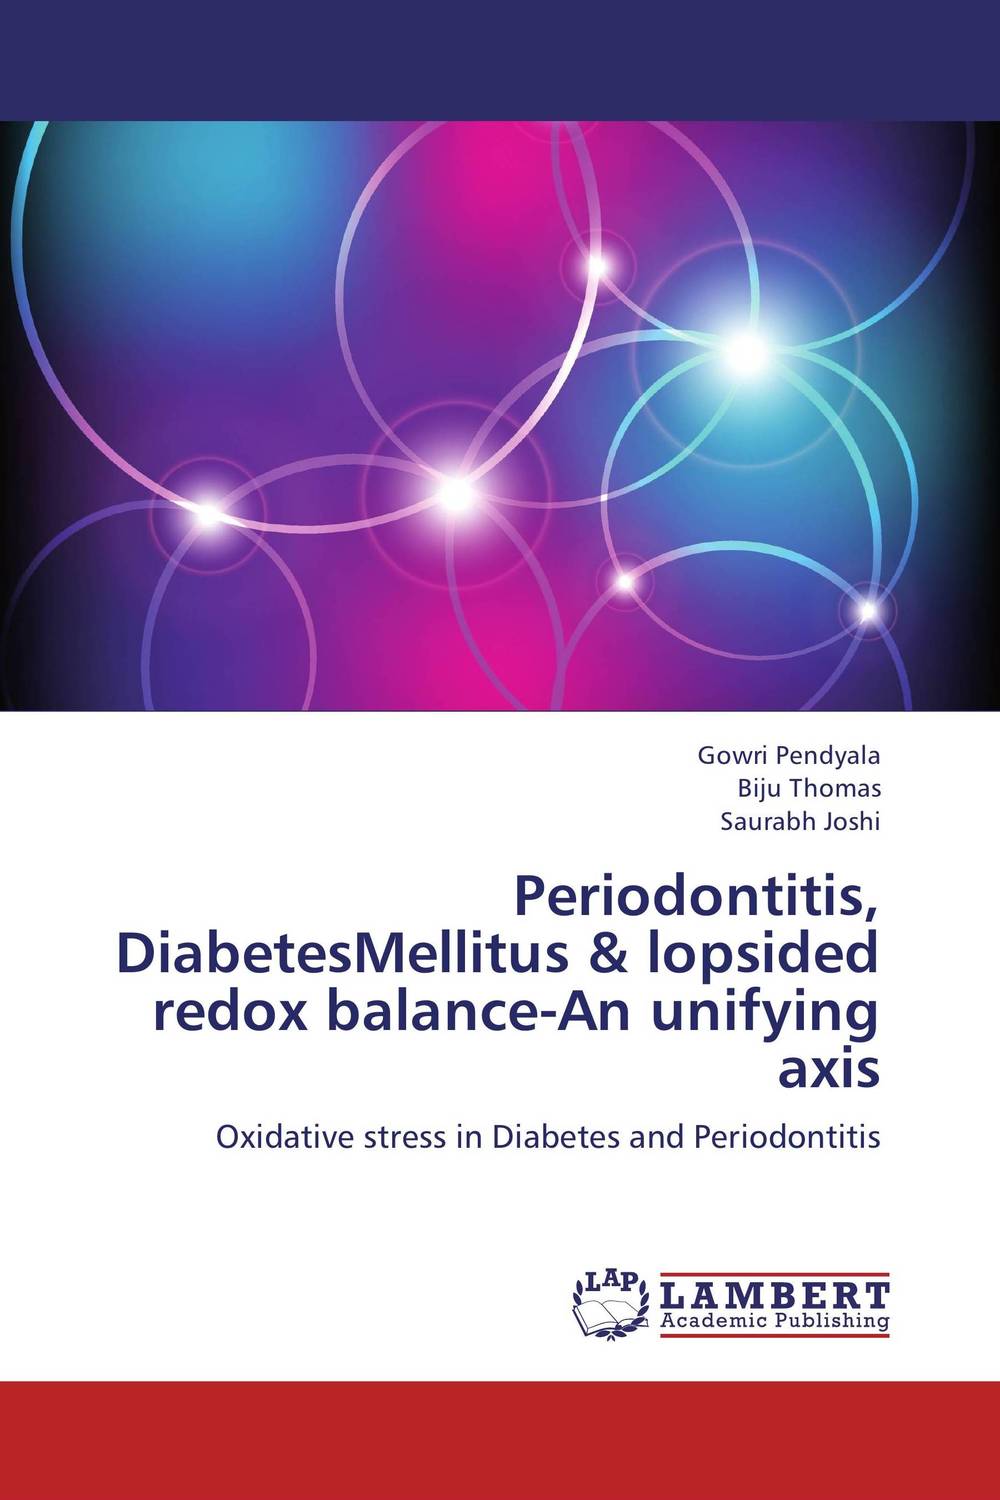 Periodontitis, DiabetesMellitus & lopsided redox balance-An unifying axis